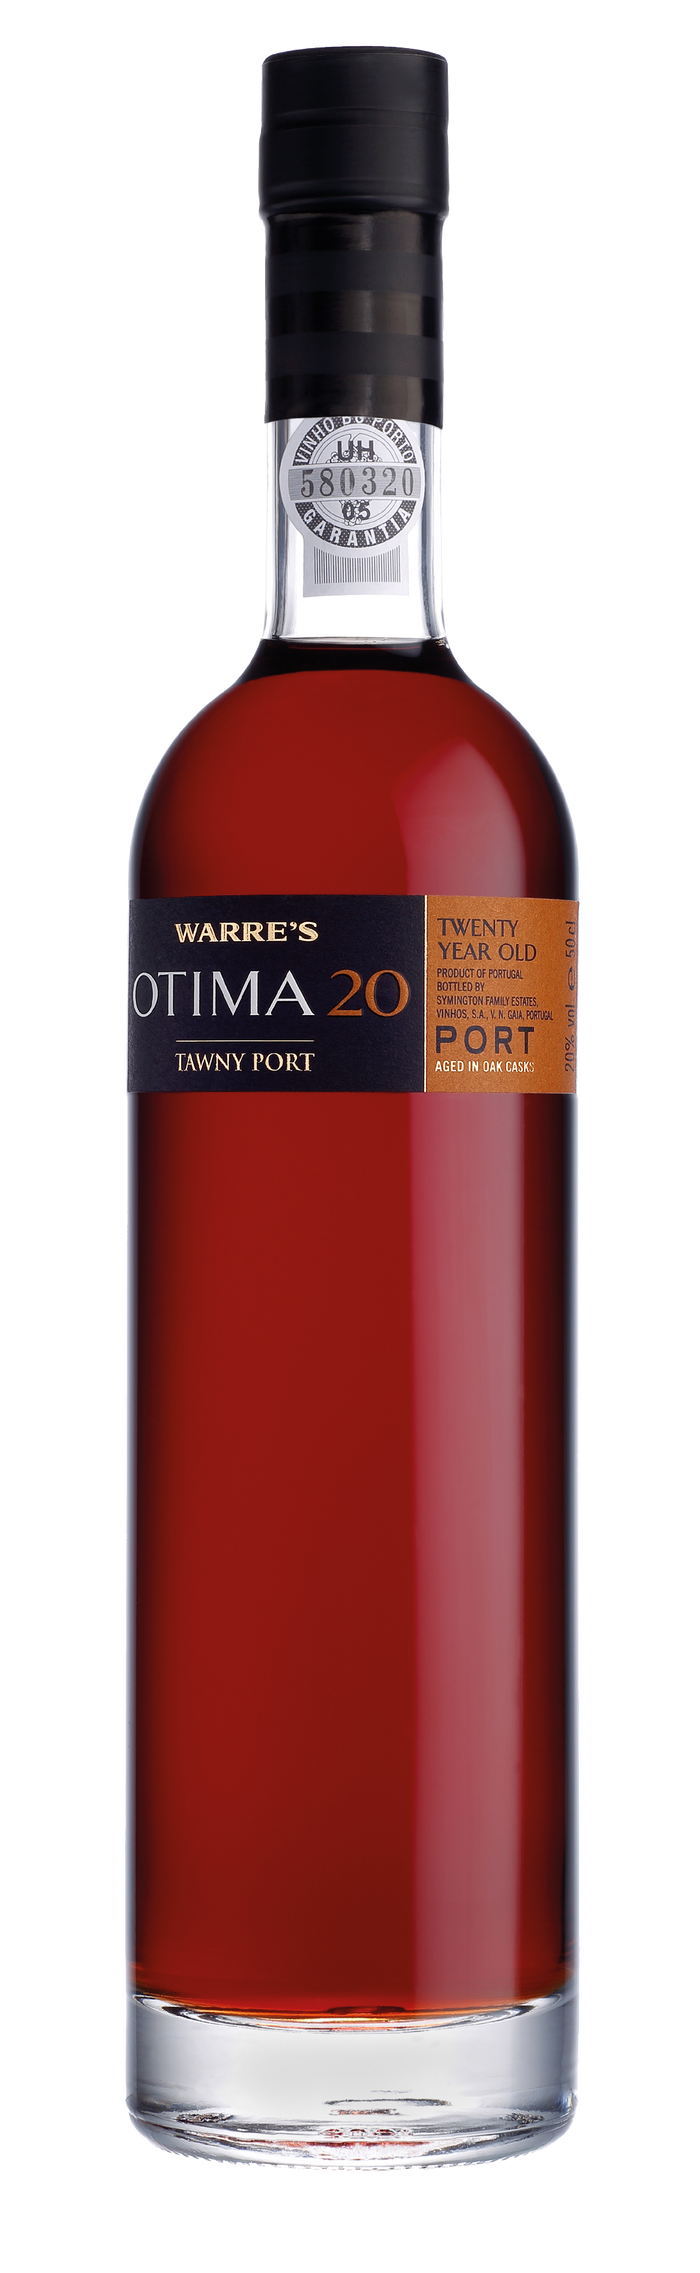 Warre's | Otima 20 Year Old Tawny Port (Half Litre) - NV